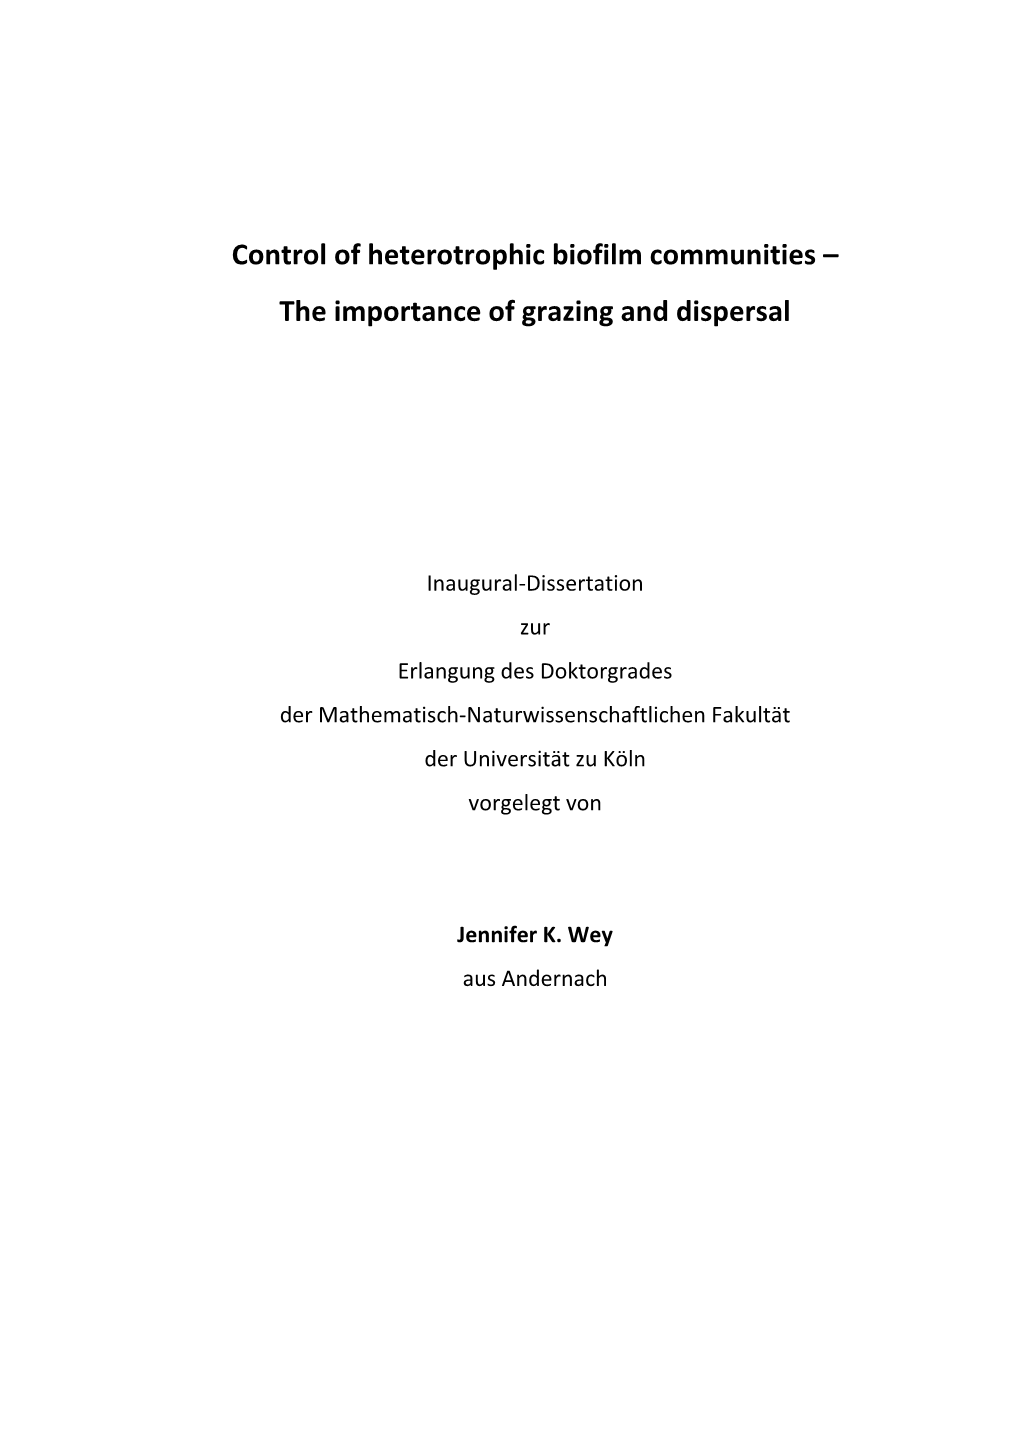 Control of Heterotrophic Biofilm Communities – the Importance of Grazing and Dispersal